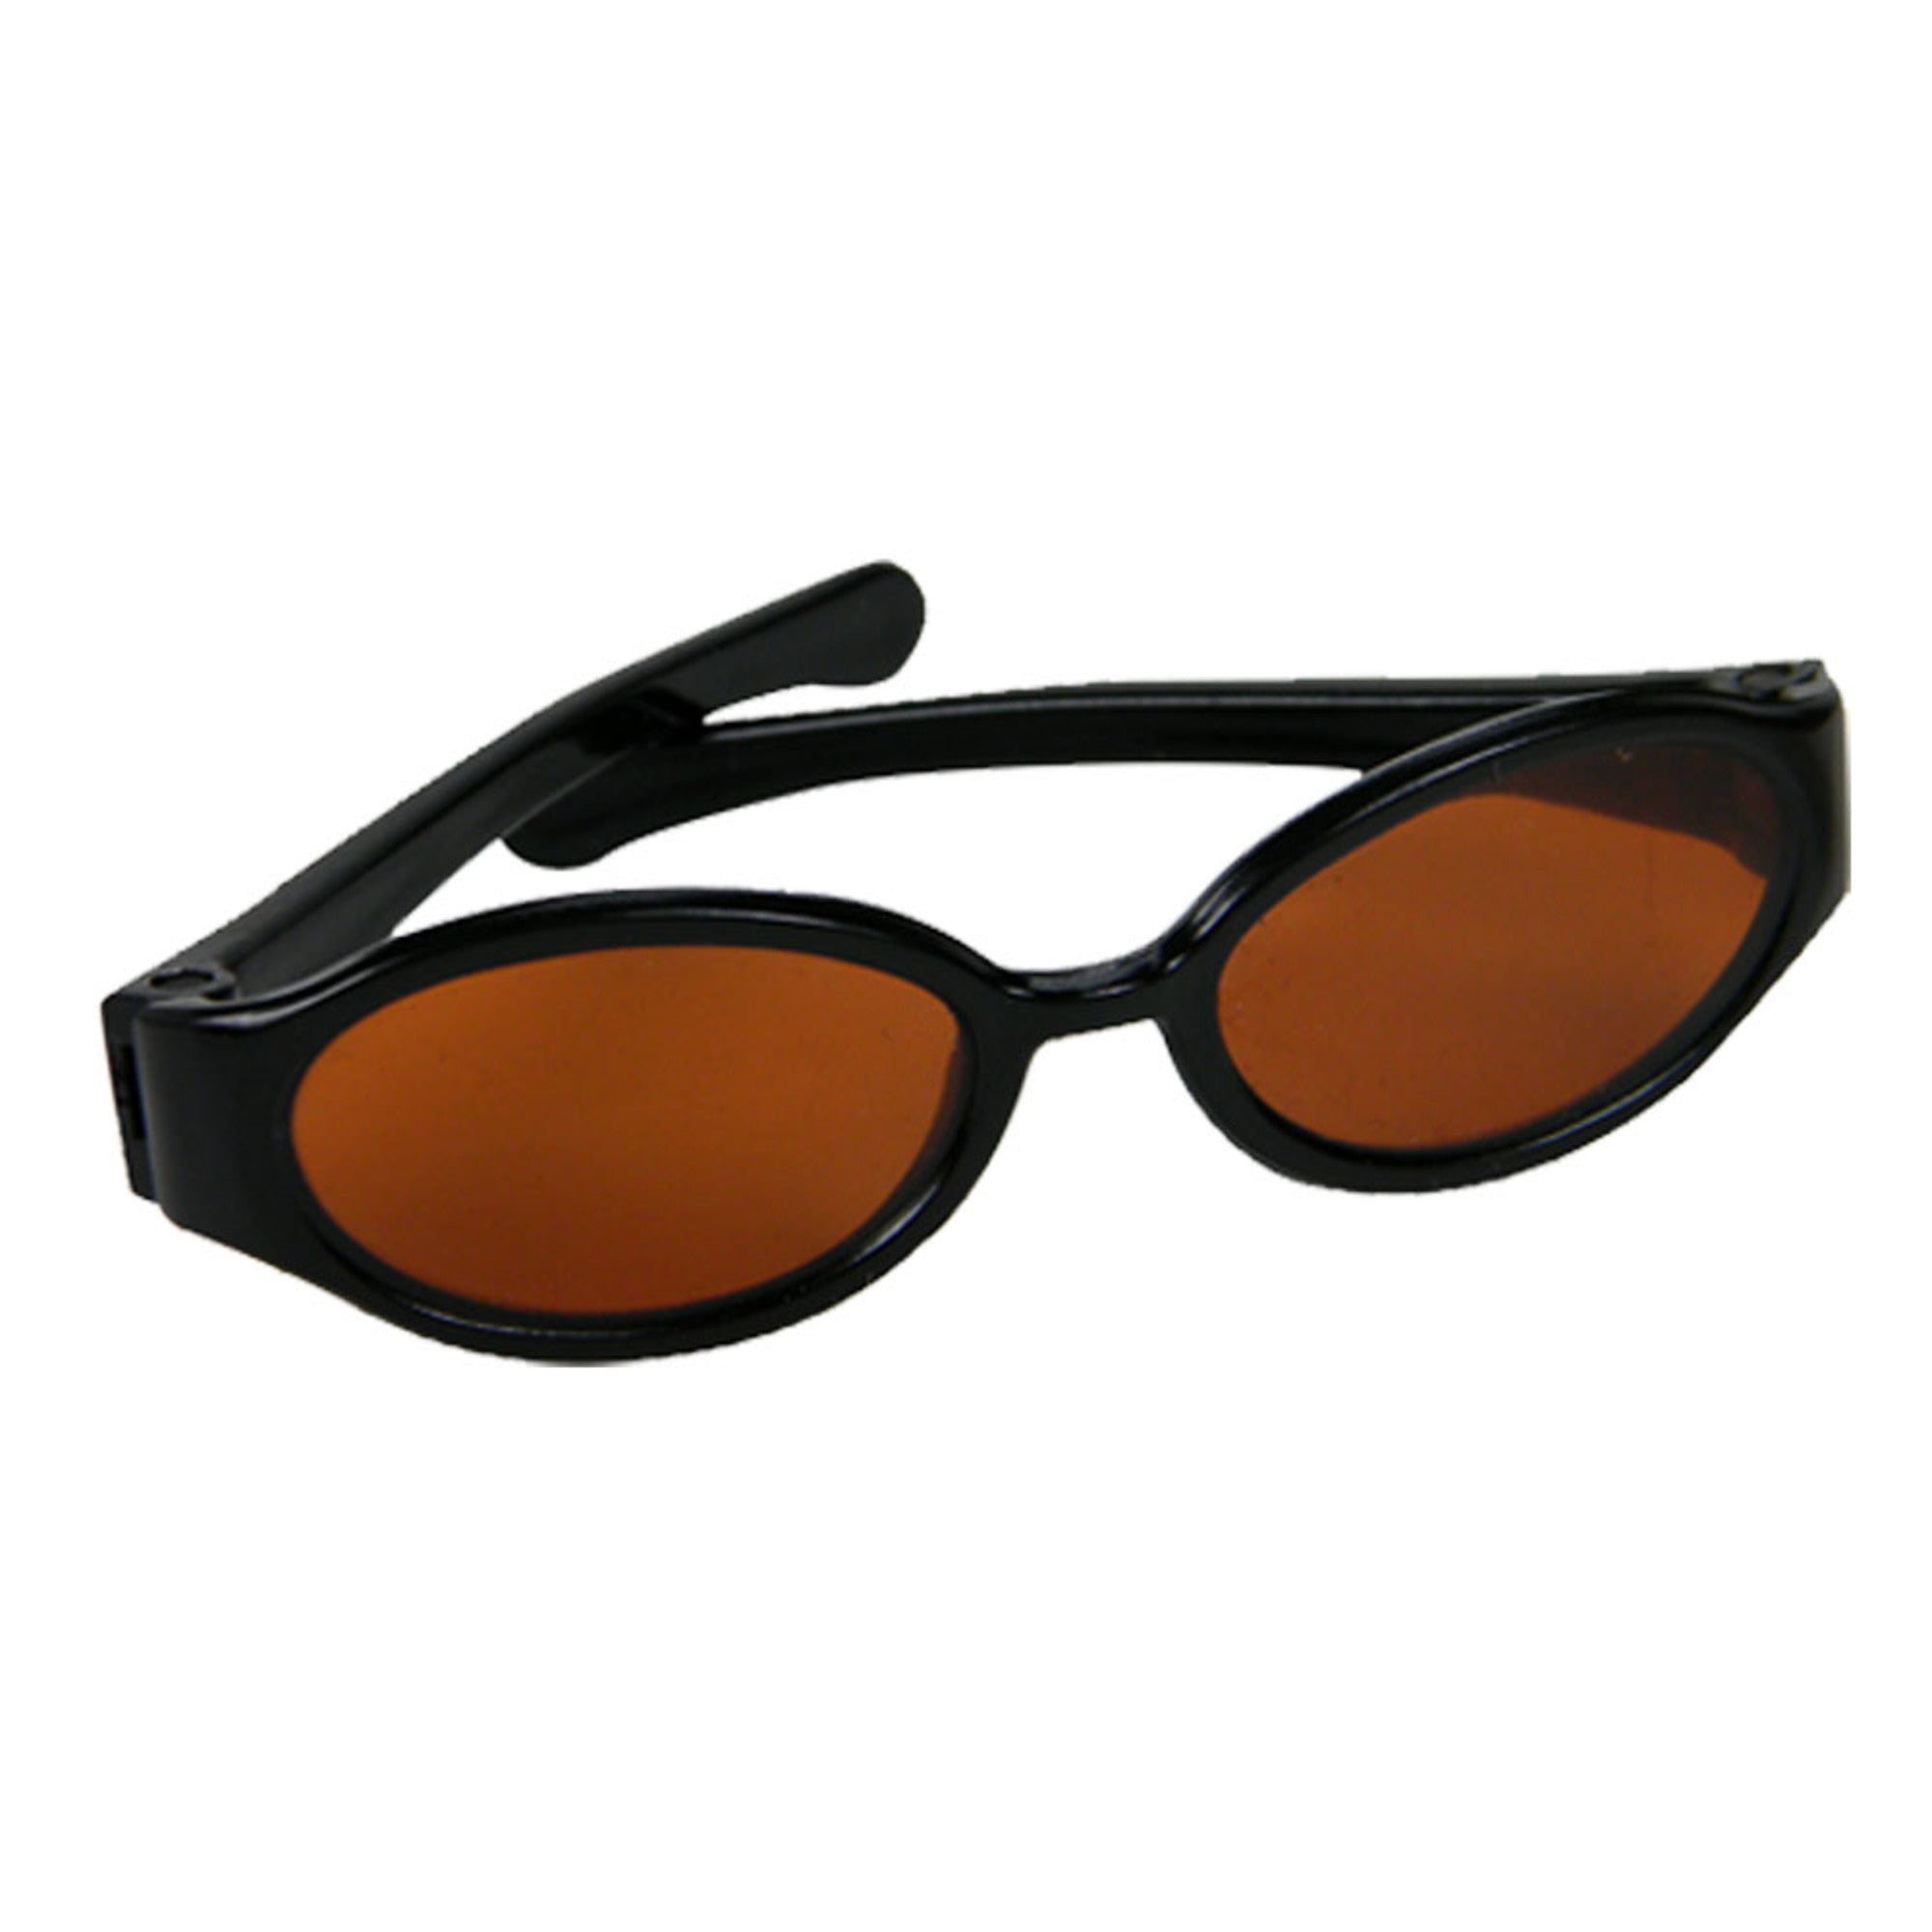 Sophia’s Stylish Gender-Neutral Solid-Colored Classic Wayfarer-Inspired Plastic Frame Sunglasses Accessory for 18” Dolls, Black